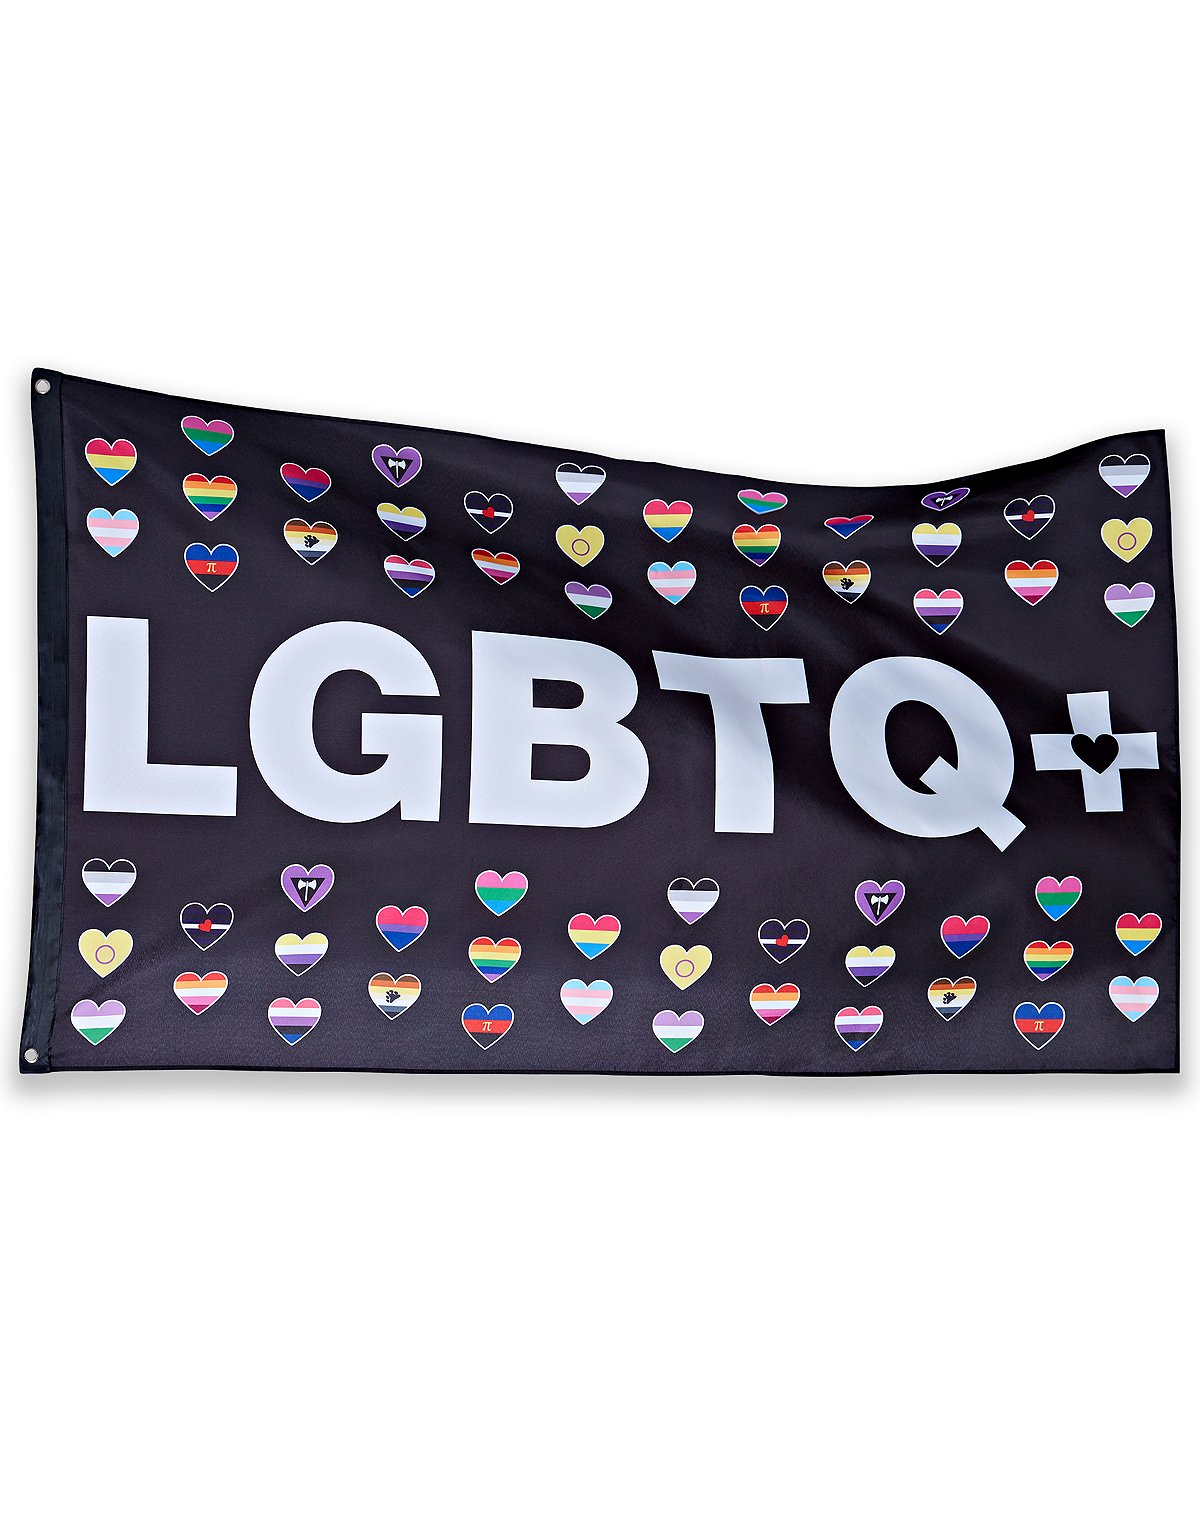 LGBTQ+ pride flags banner